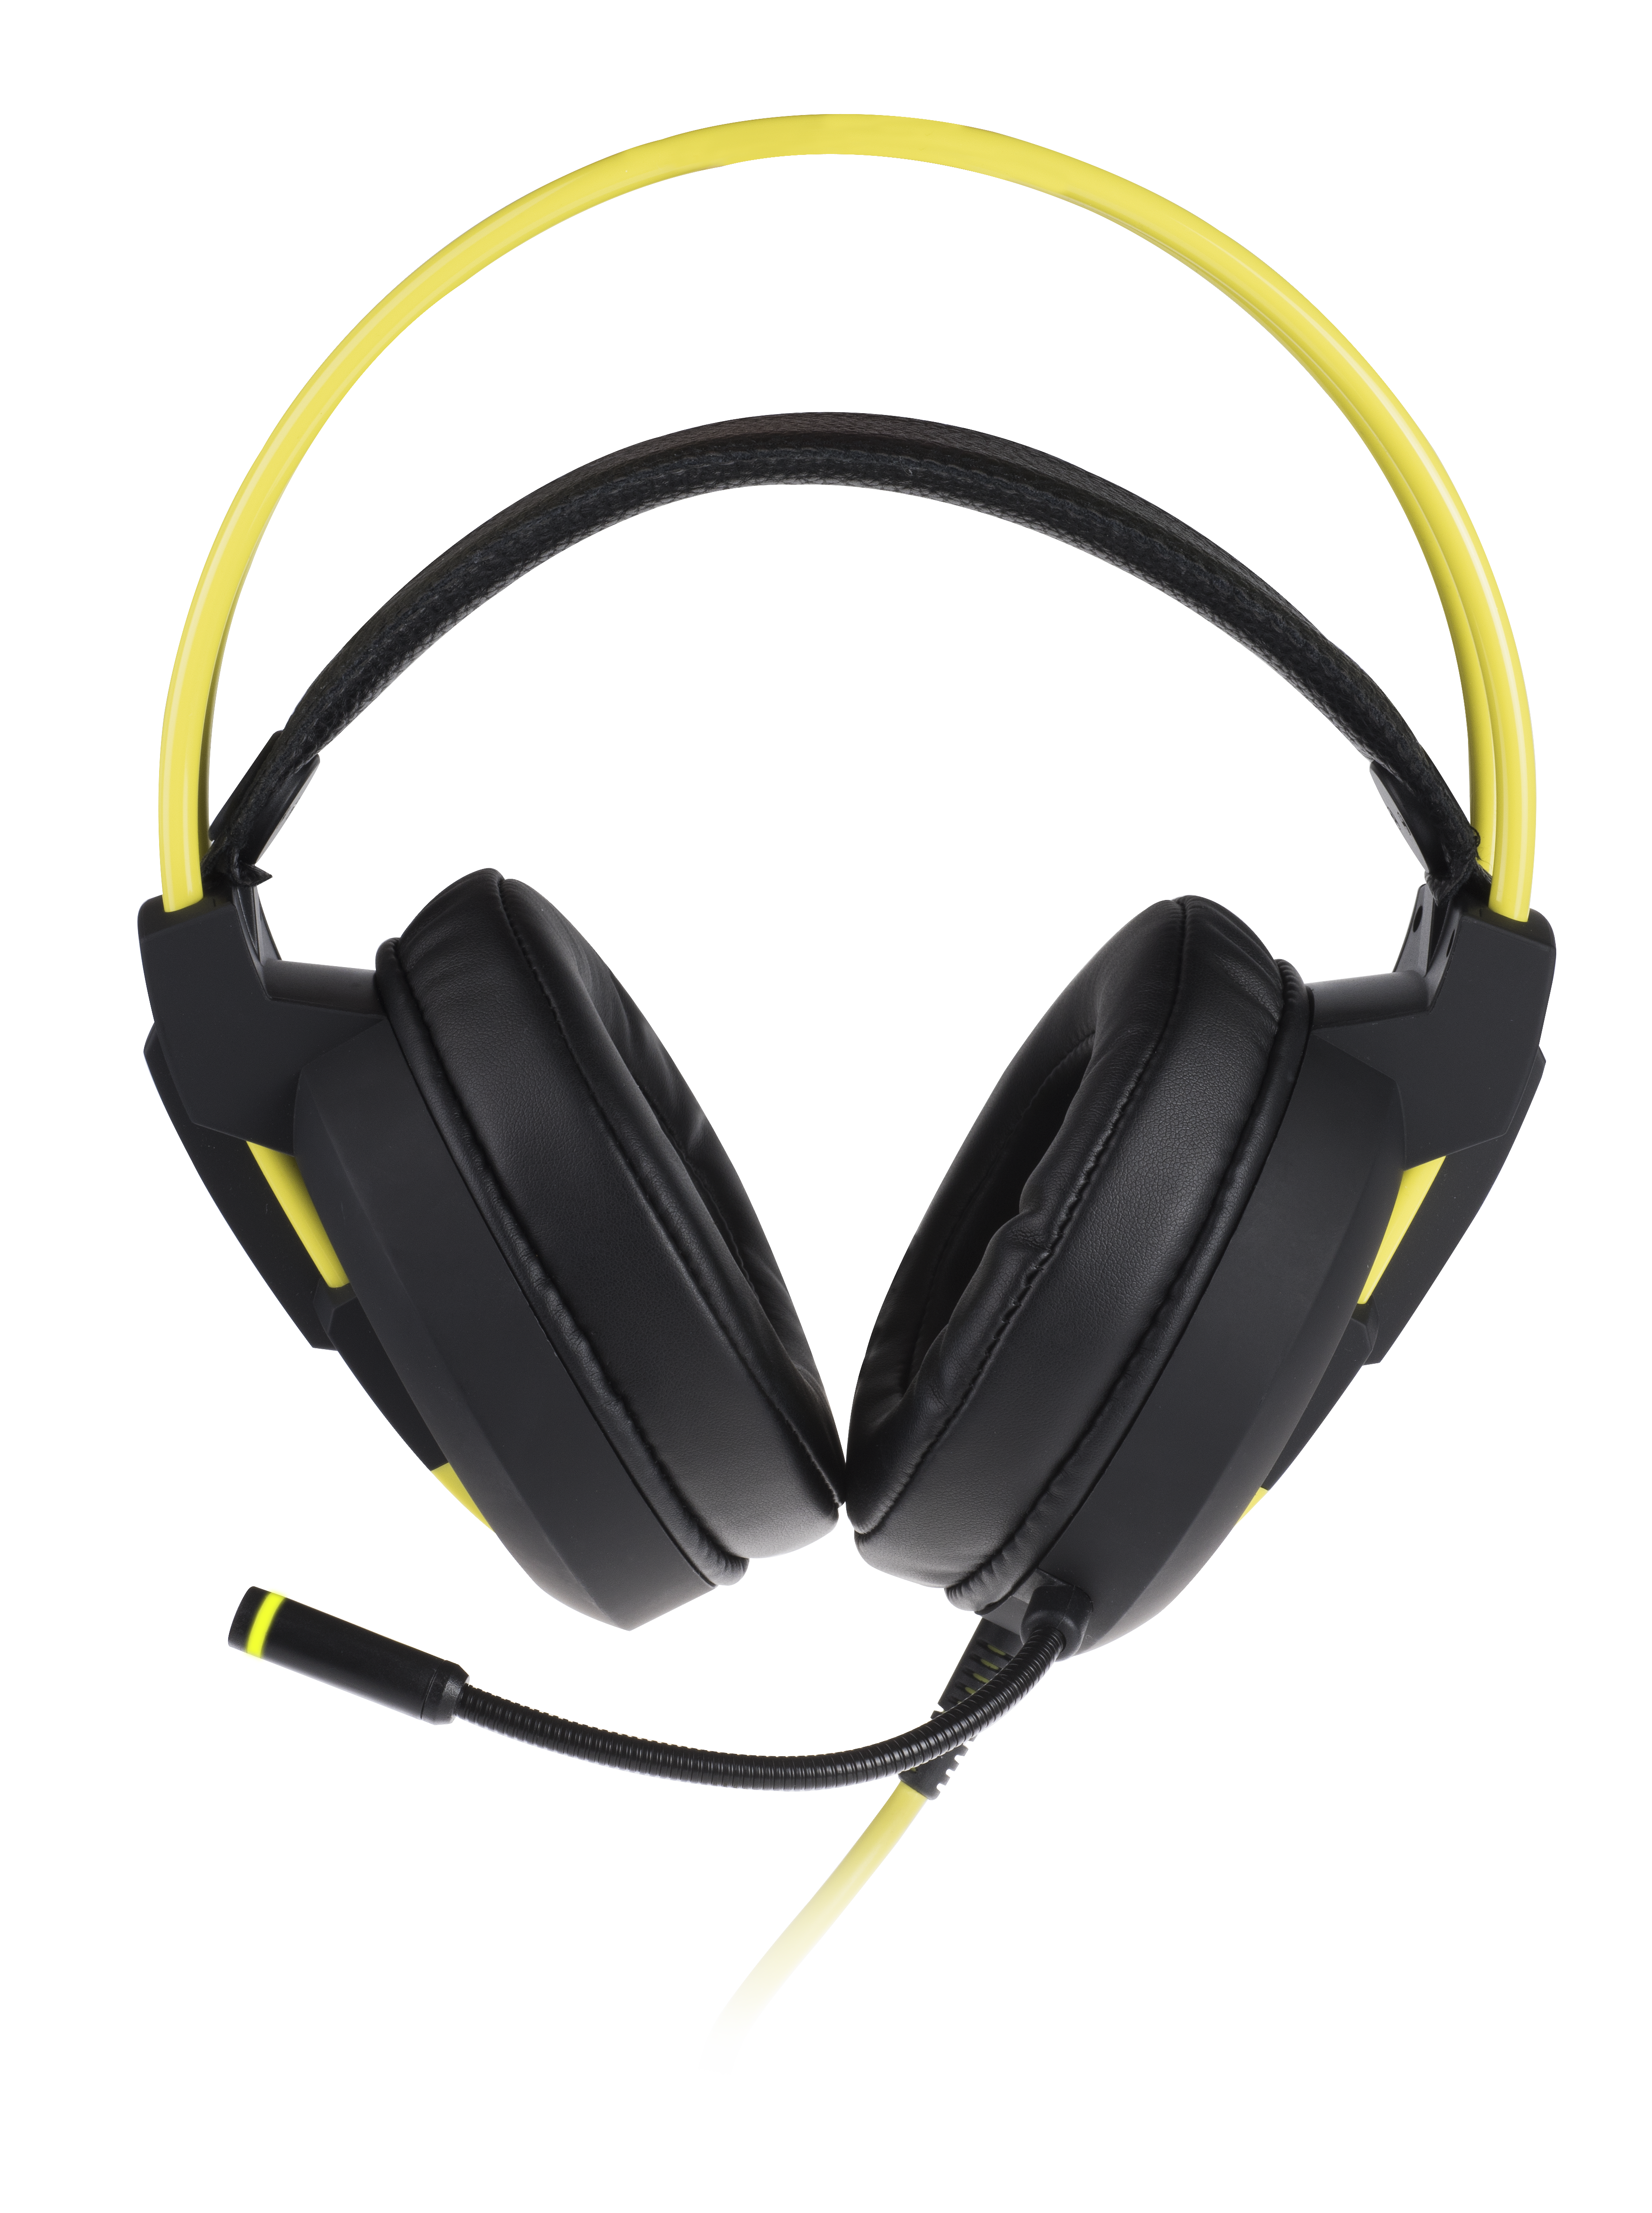 SNAKEBYTE Schwarz-Gelb Gaming-Headset Head:Set Over-ear PRO™,